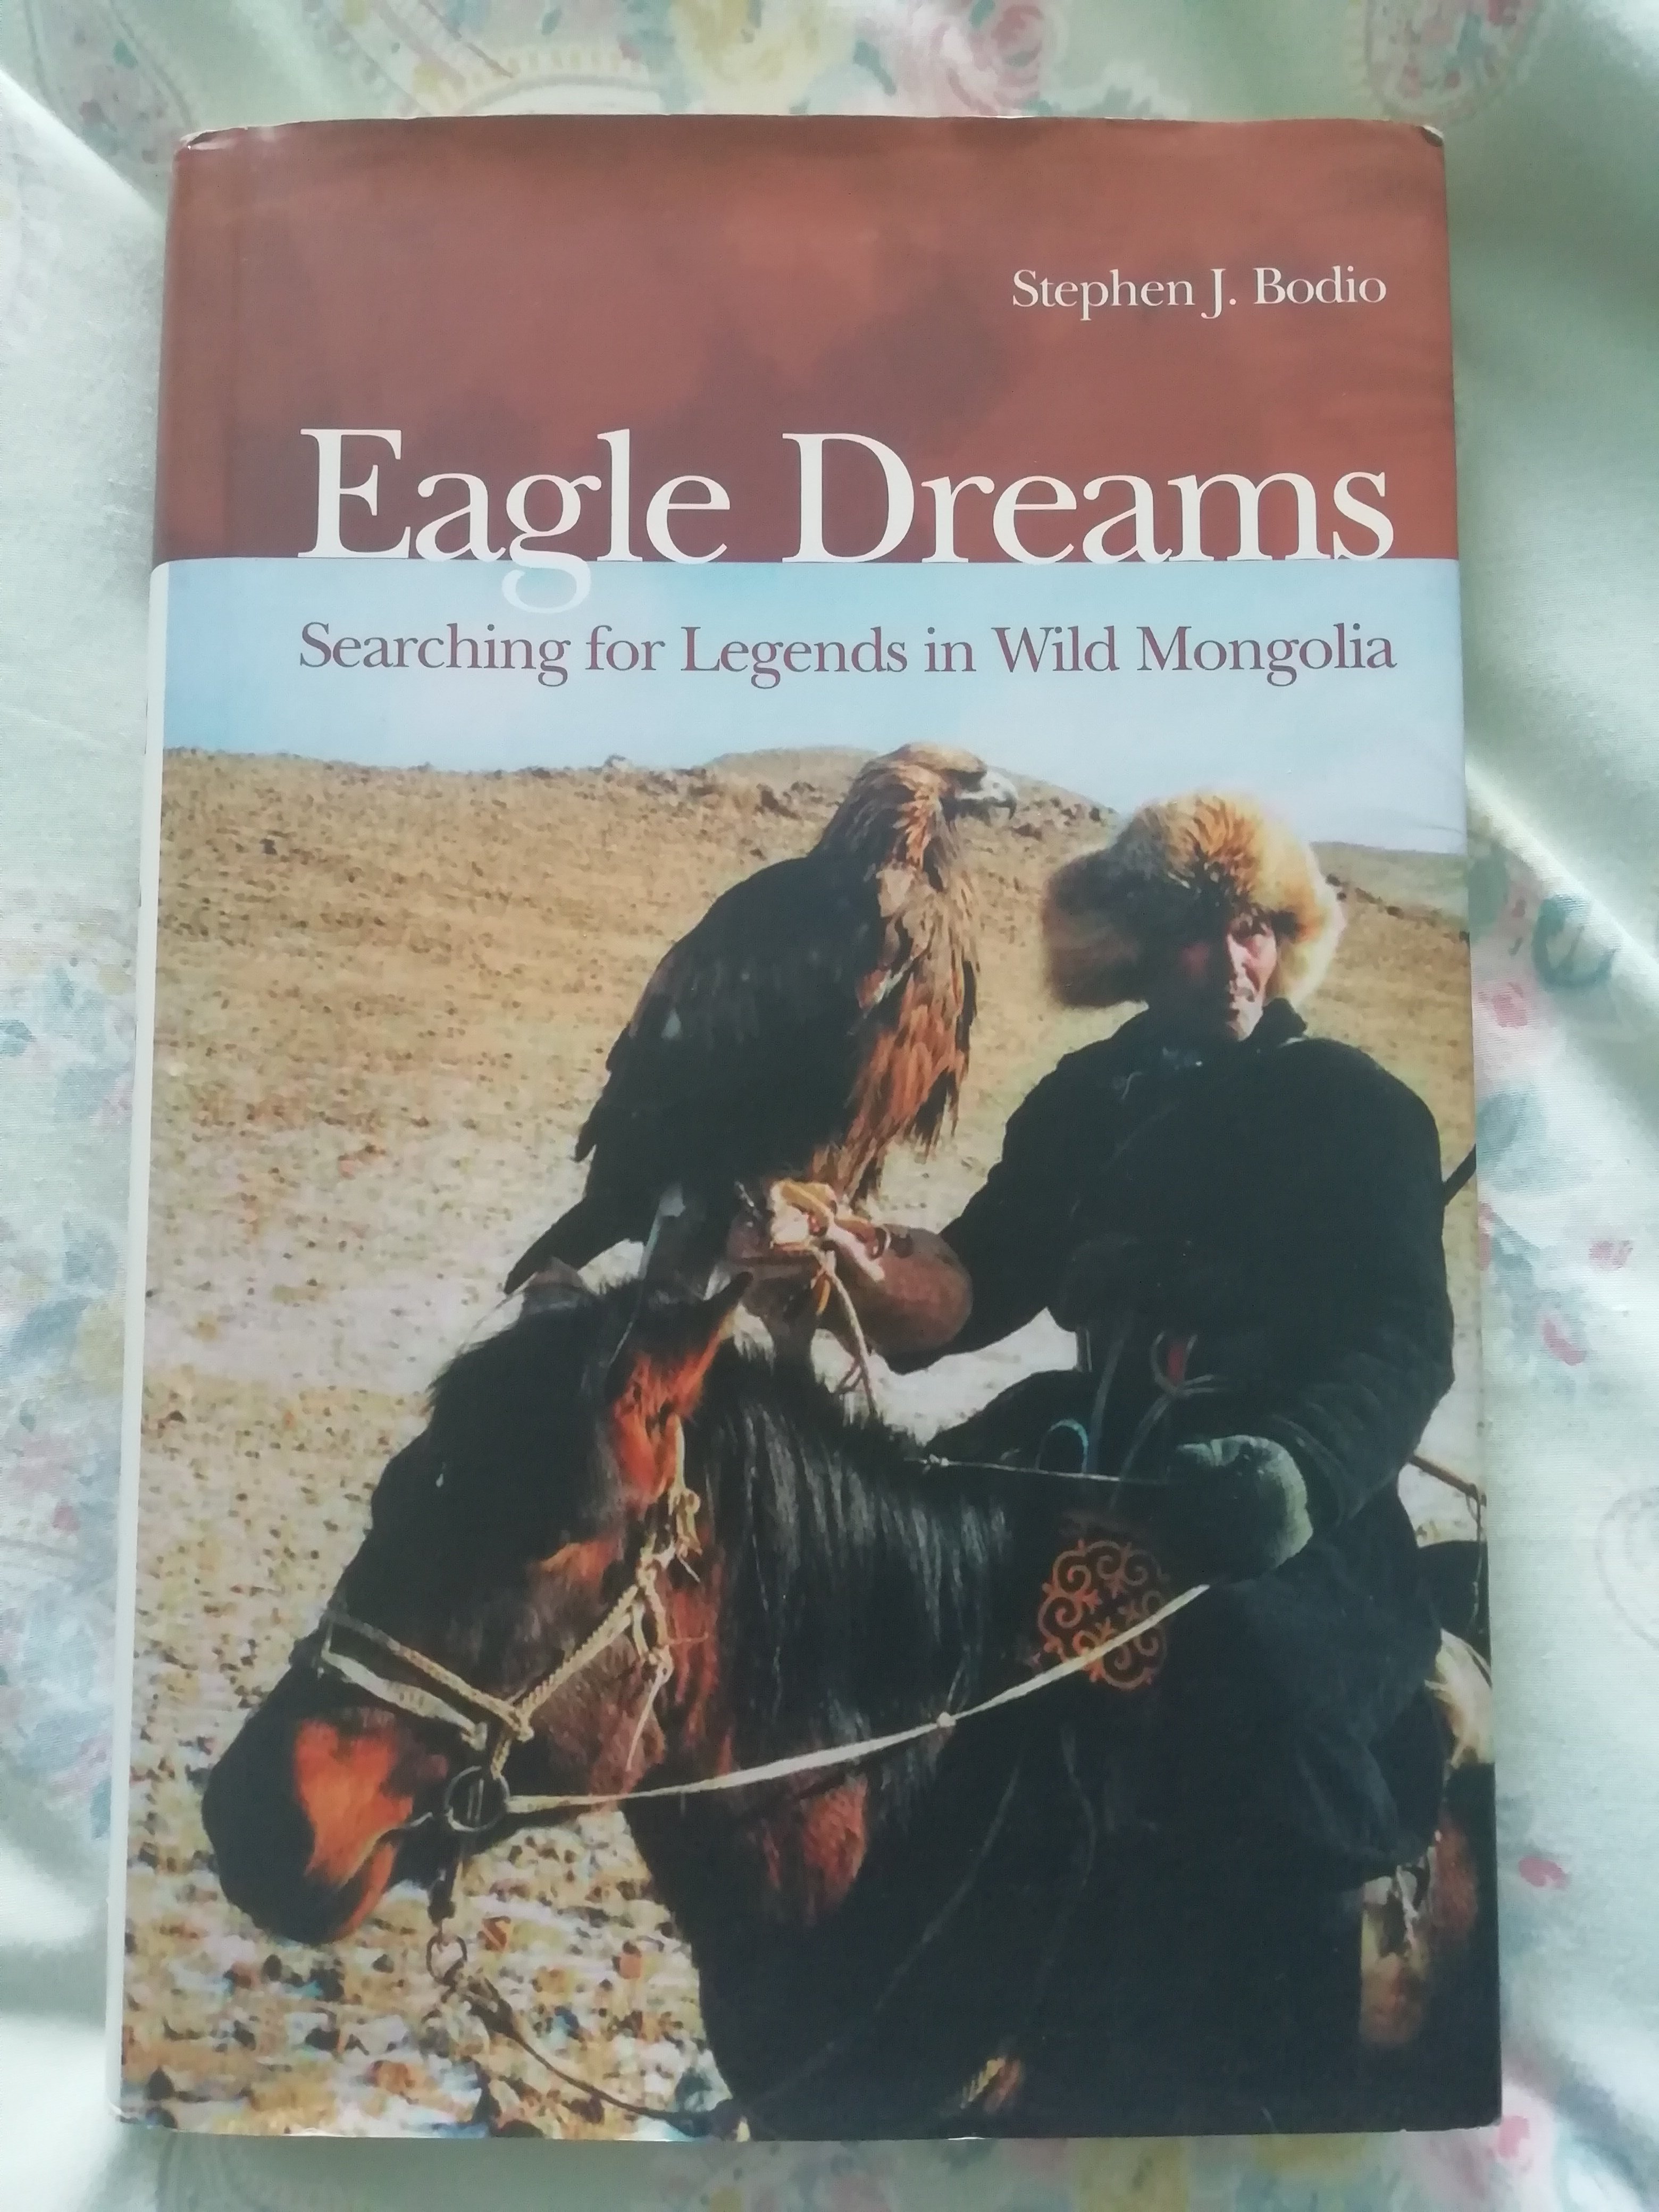 Eagle dreams book by Stephen bodio